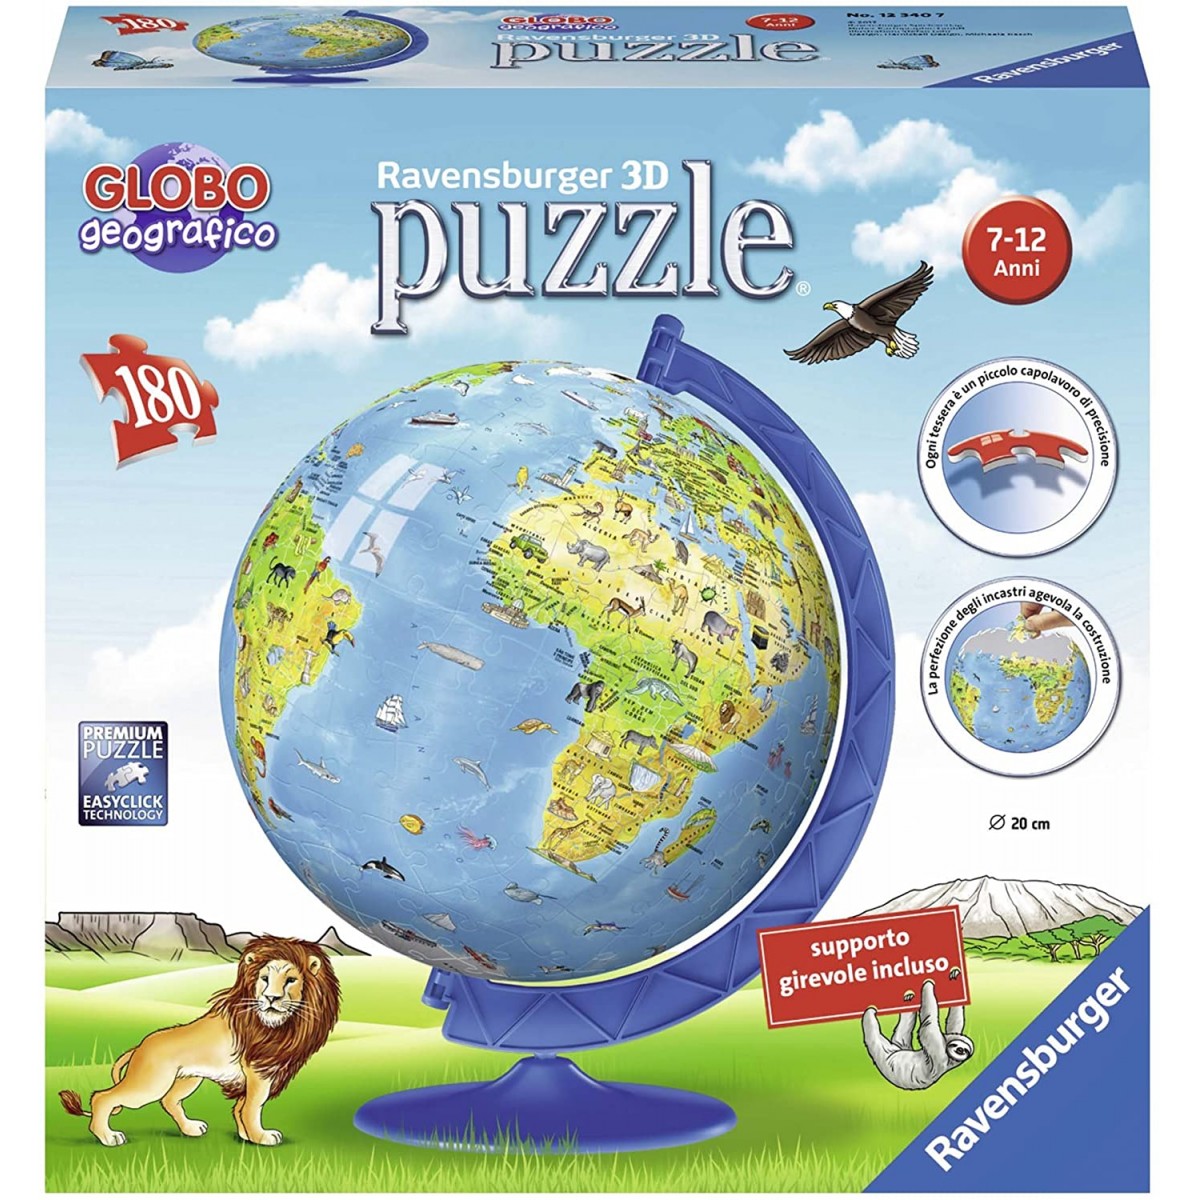 Puzzle Globo Geografico 3D da 180 pezzi - Ravensburger